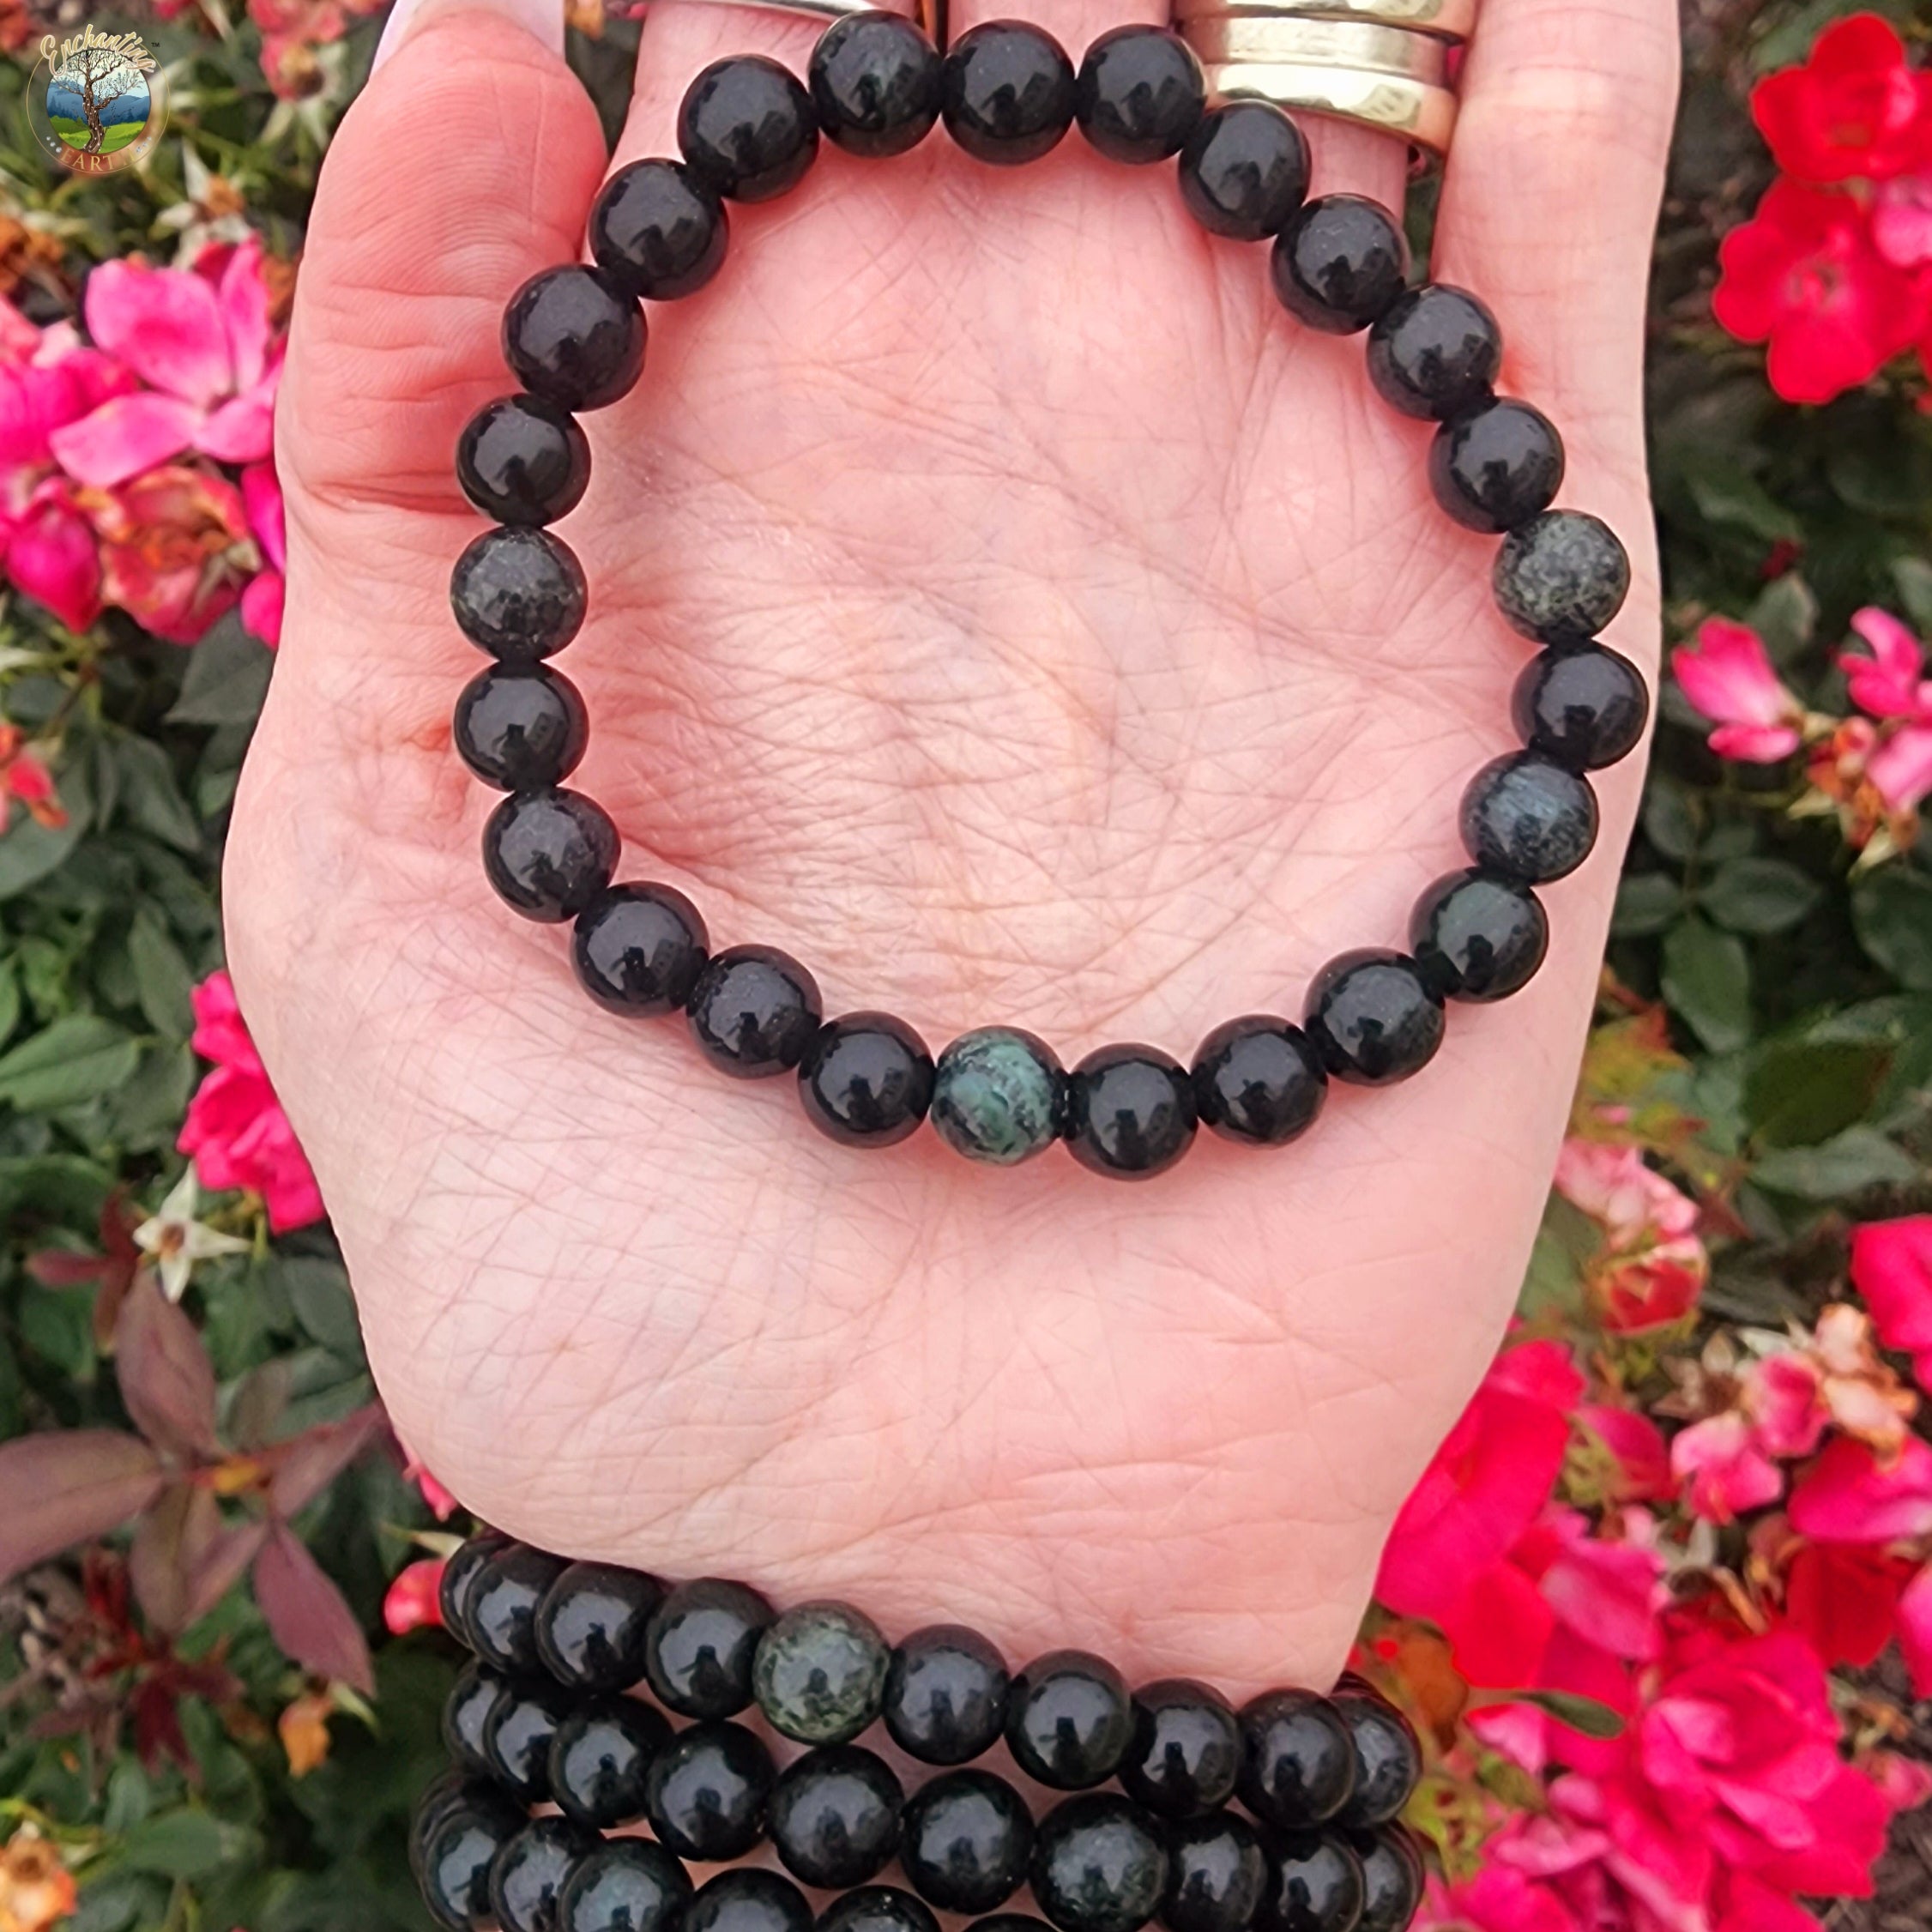 Black Jade Bracelet for Abundance, Good Luck and Protection Against Negative Energy